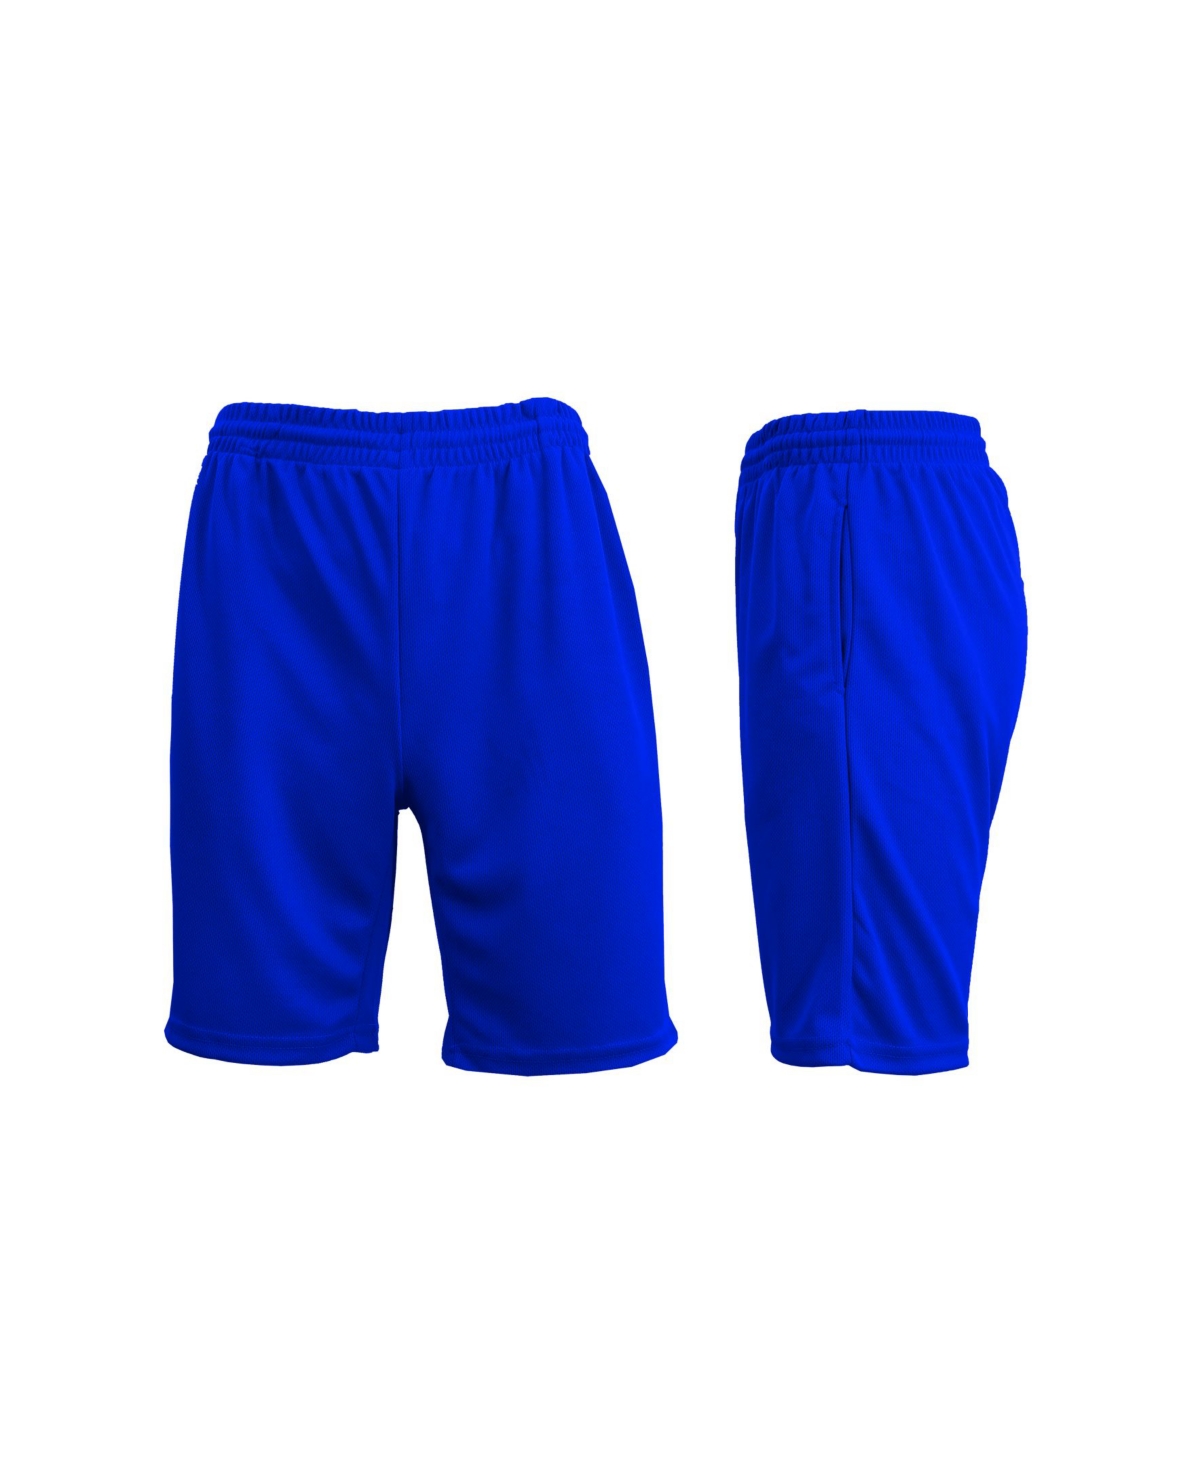 Men's Moisture Wicking Performance Basic Mesh Shorts - Bright Blue